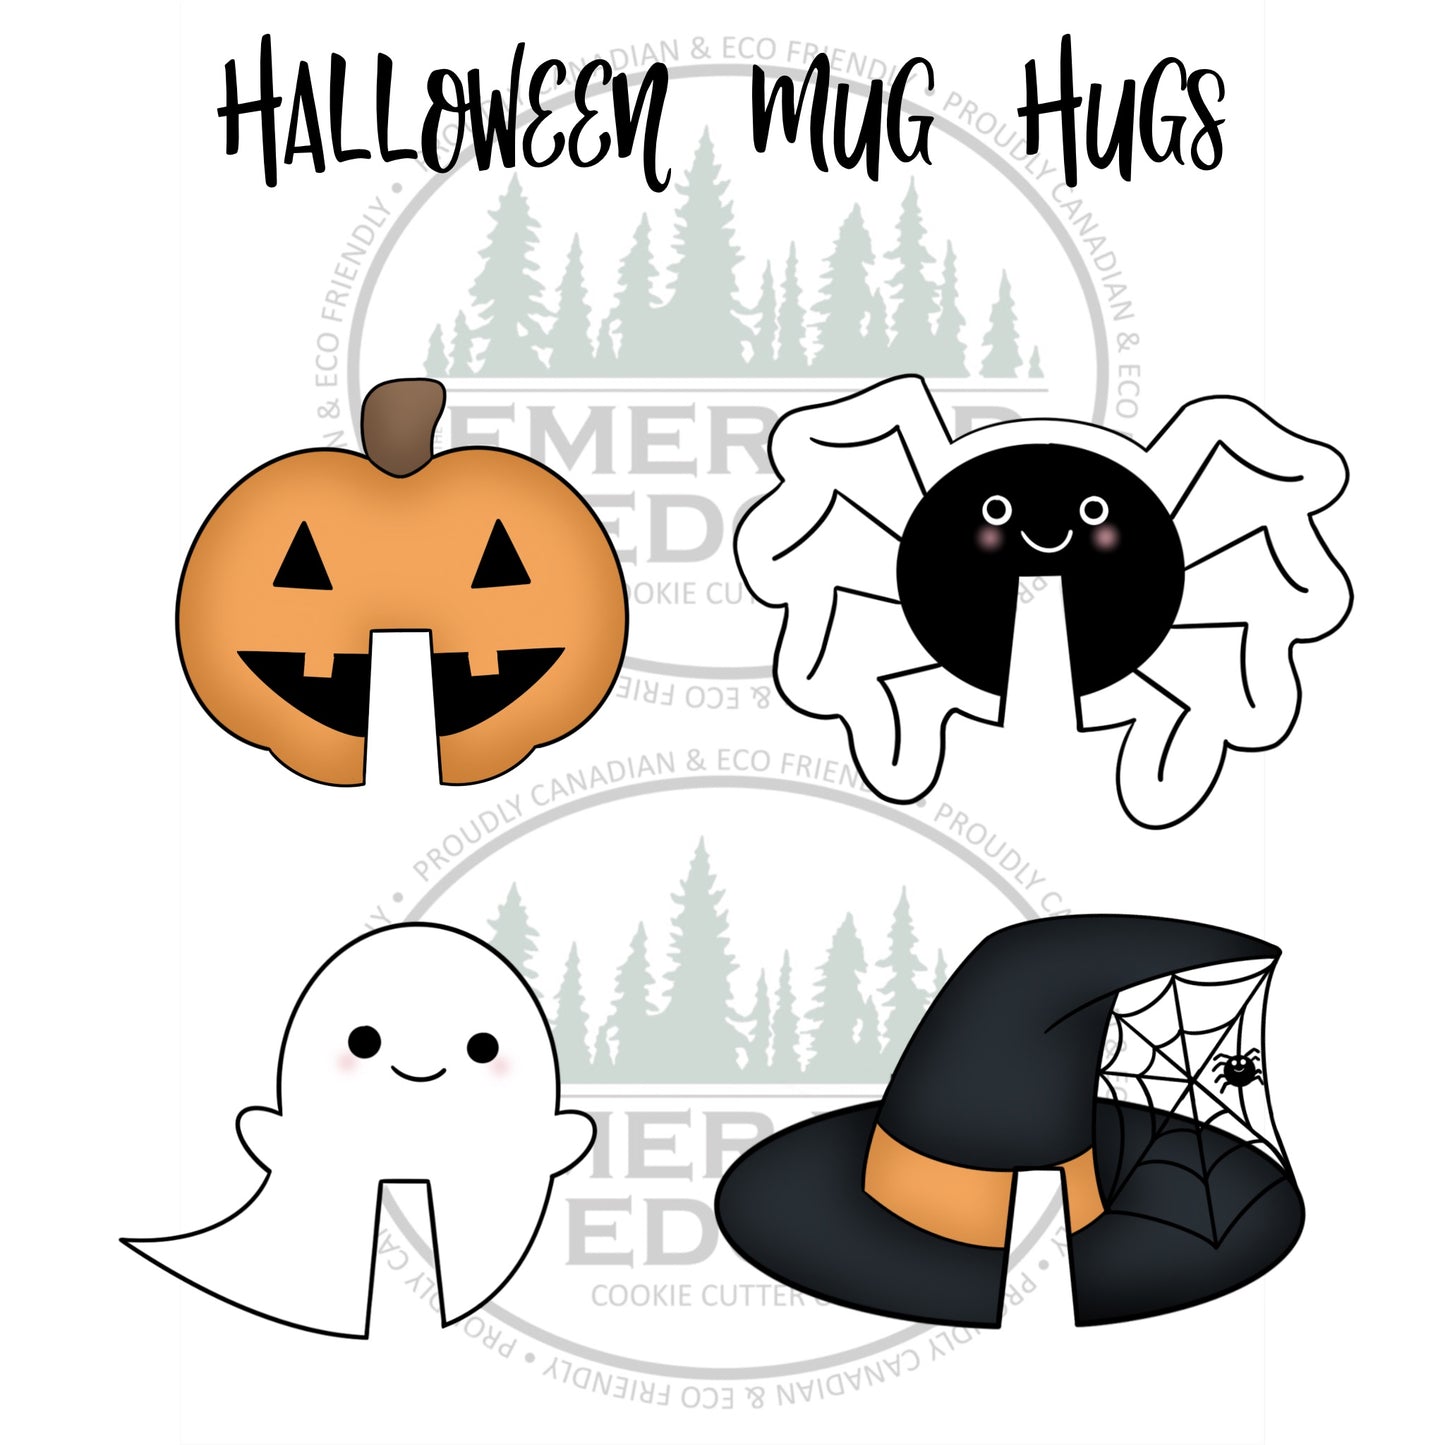 Halloween Mug Hugs